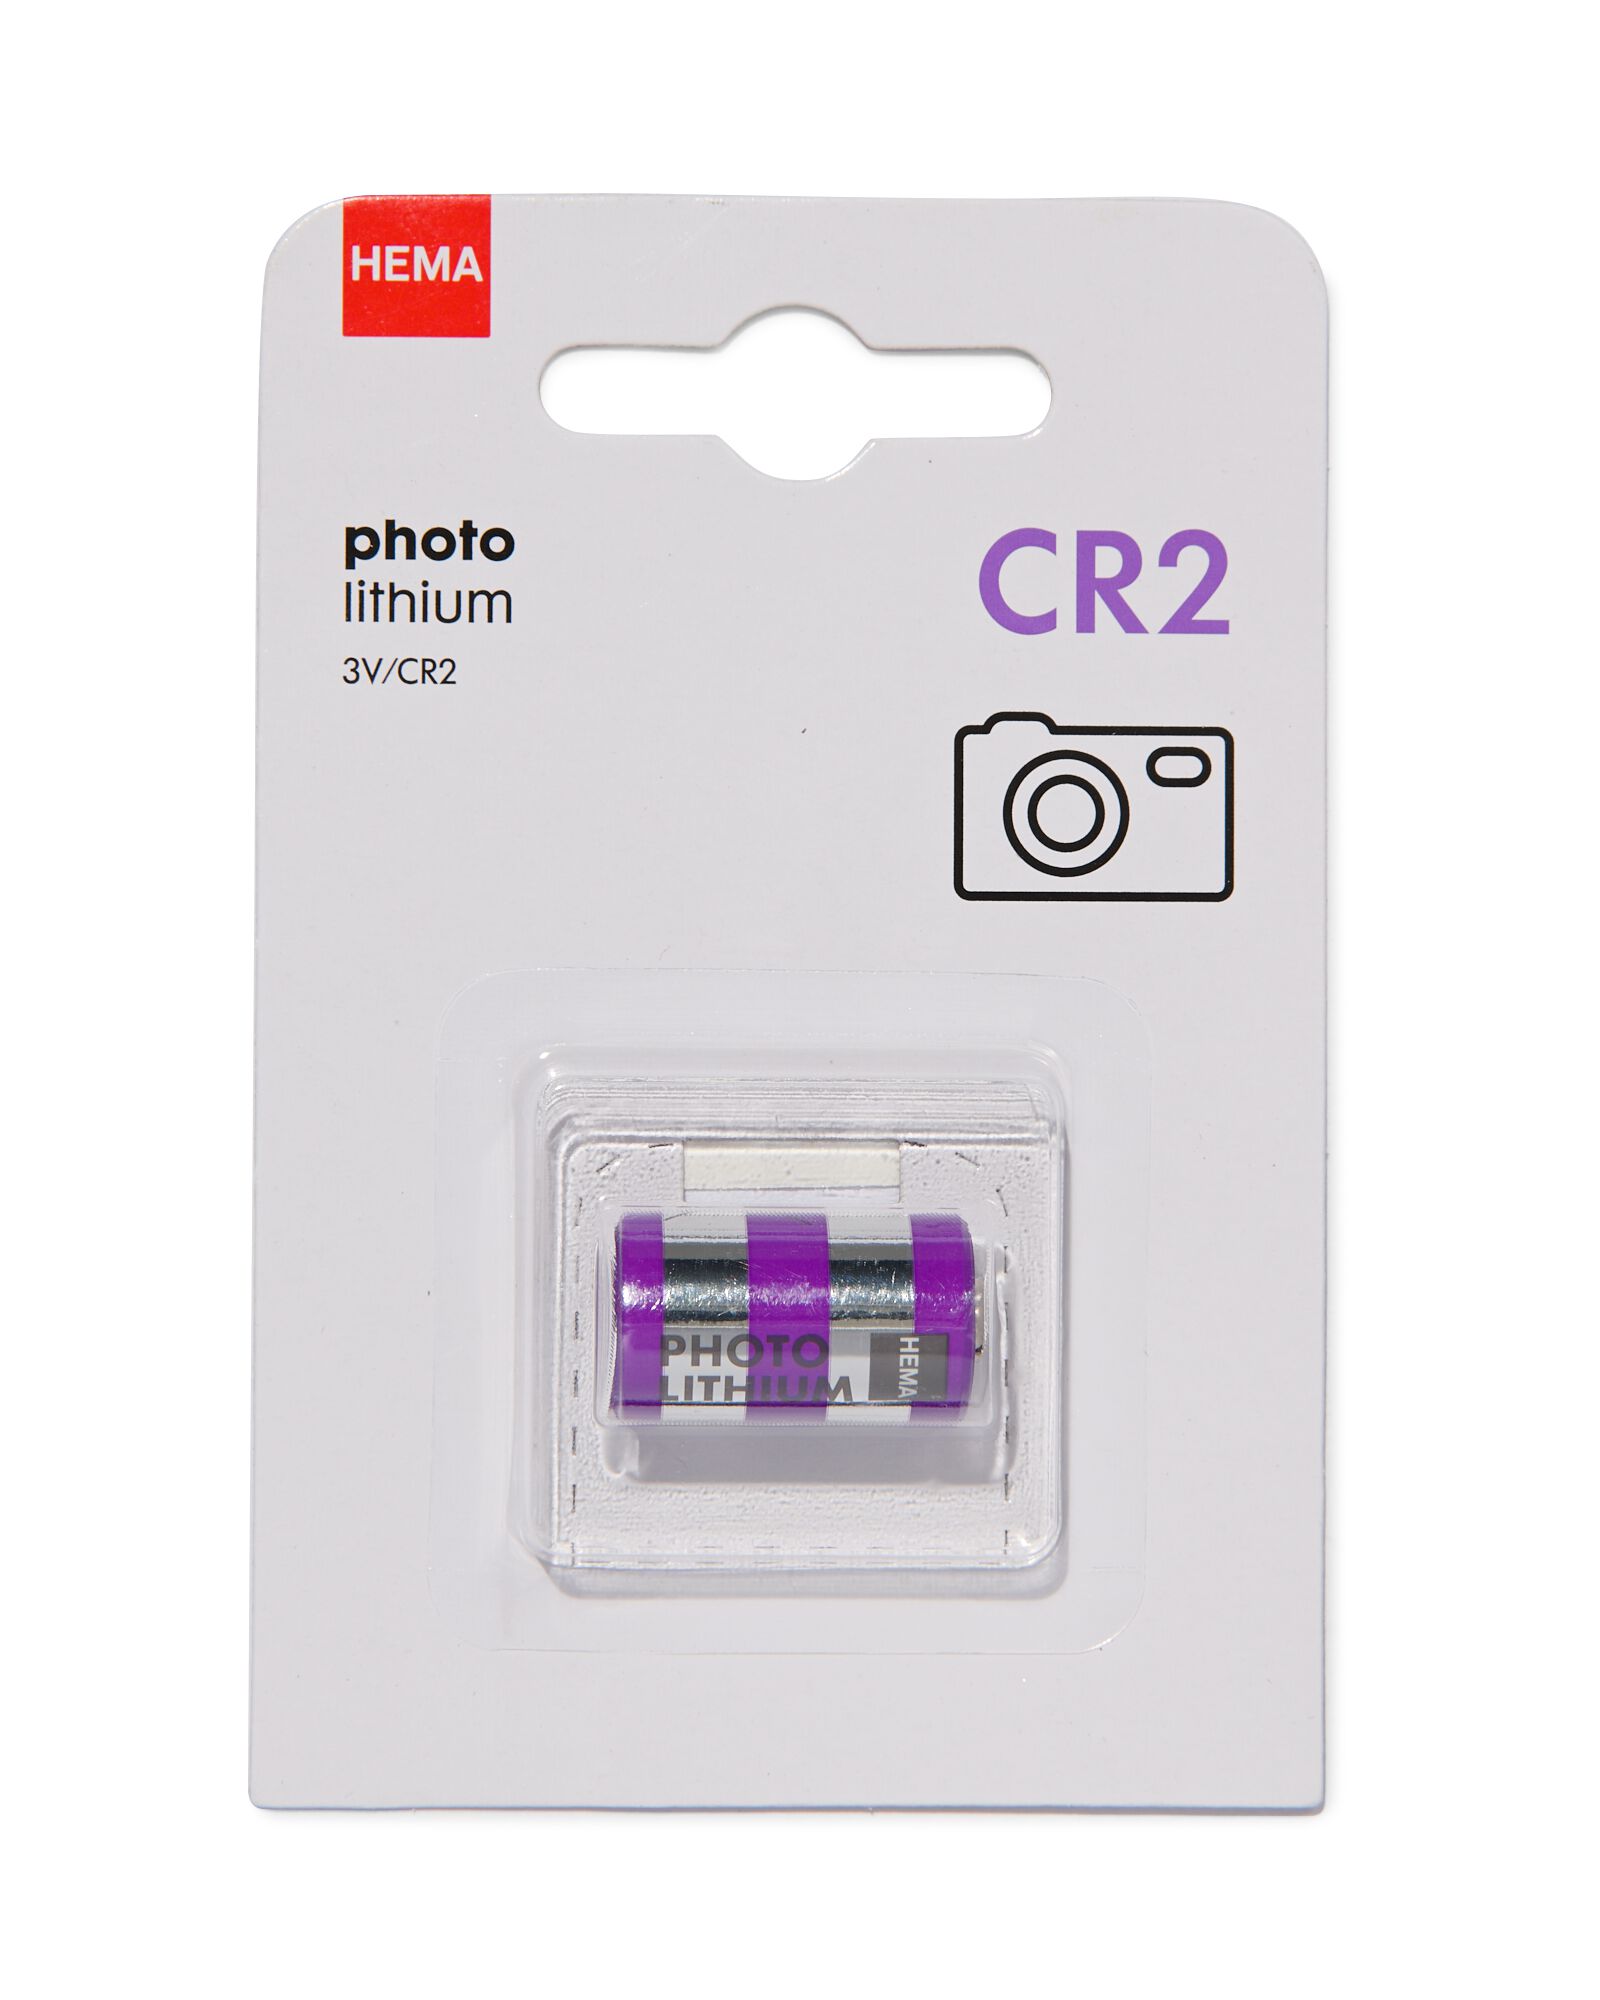 CR2 photo lithium batterij - HEMA